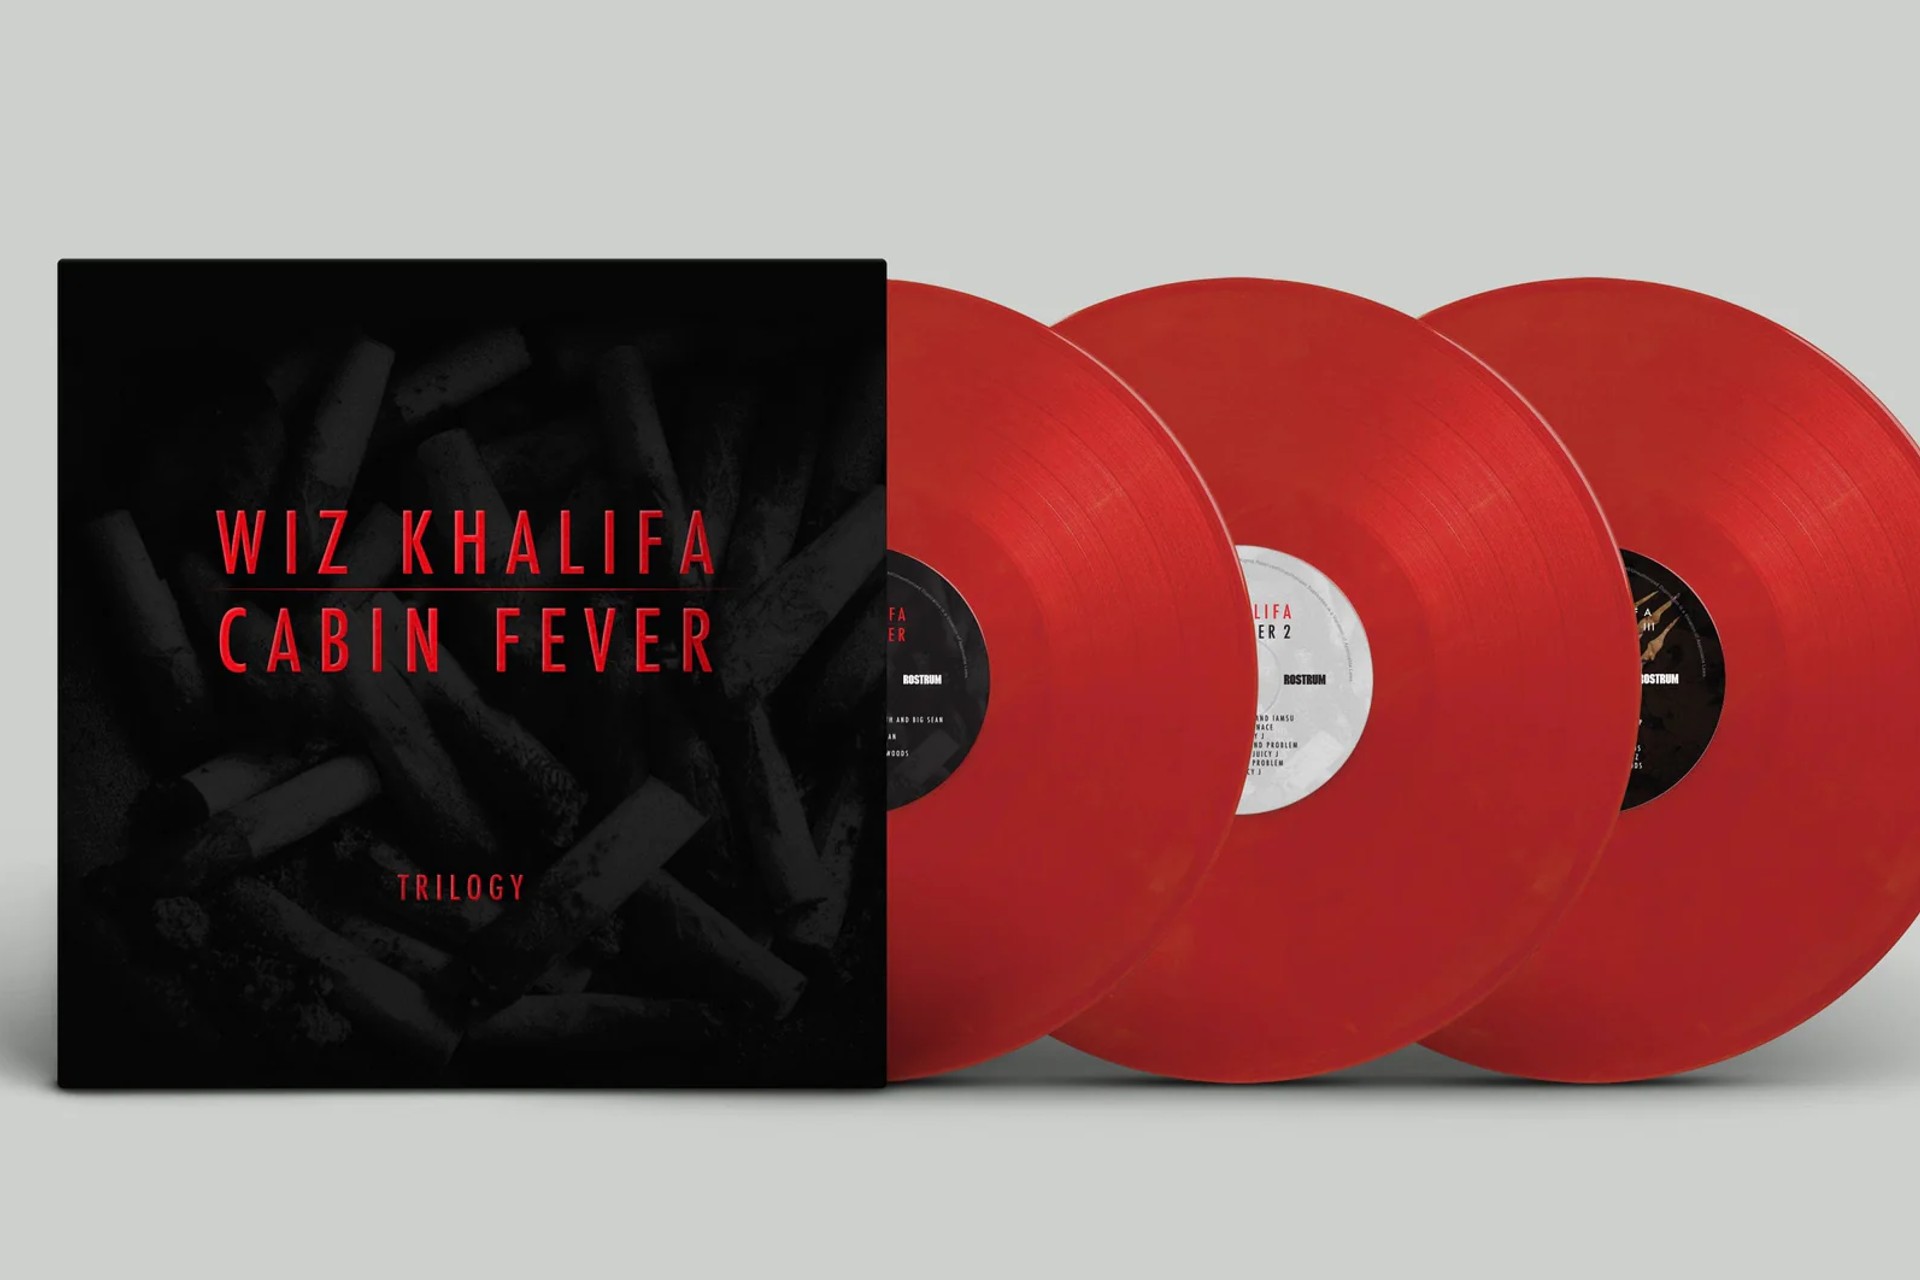 Wiz Khalifa 'Cabin Fever' Trilogy vinyl